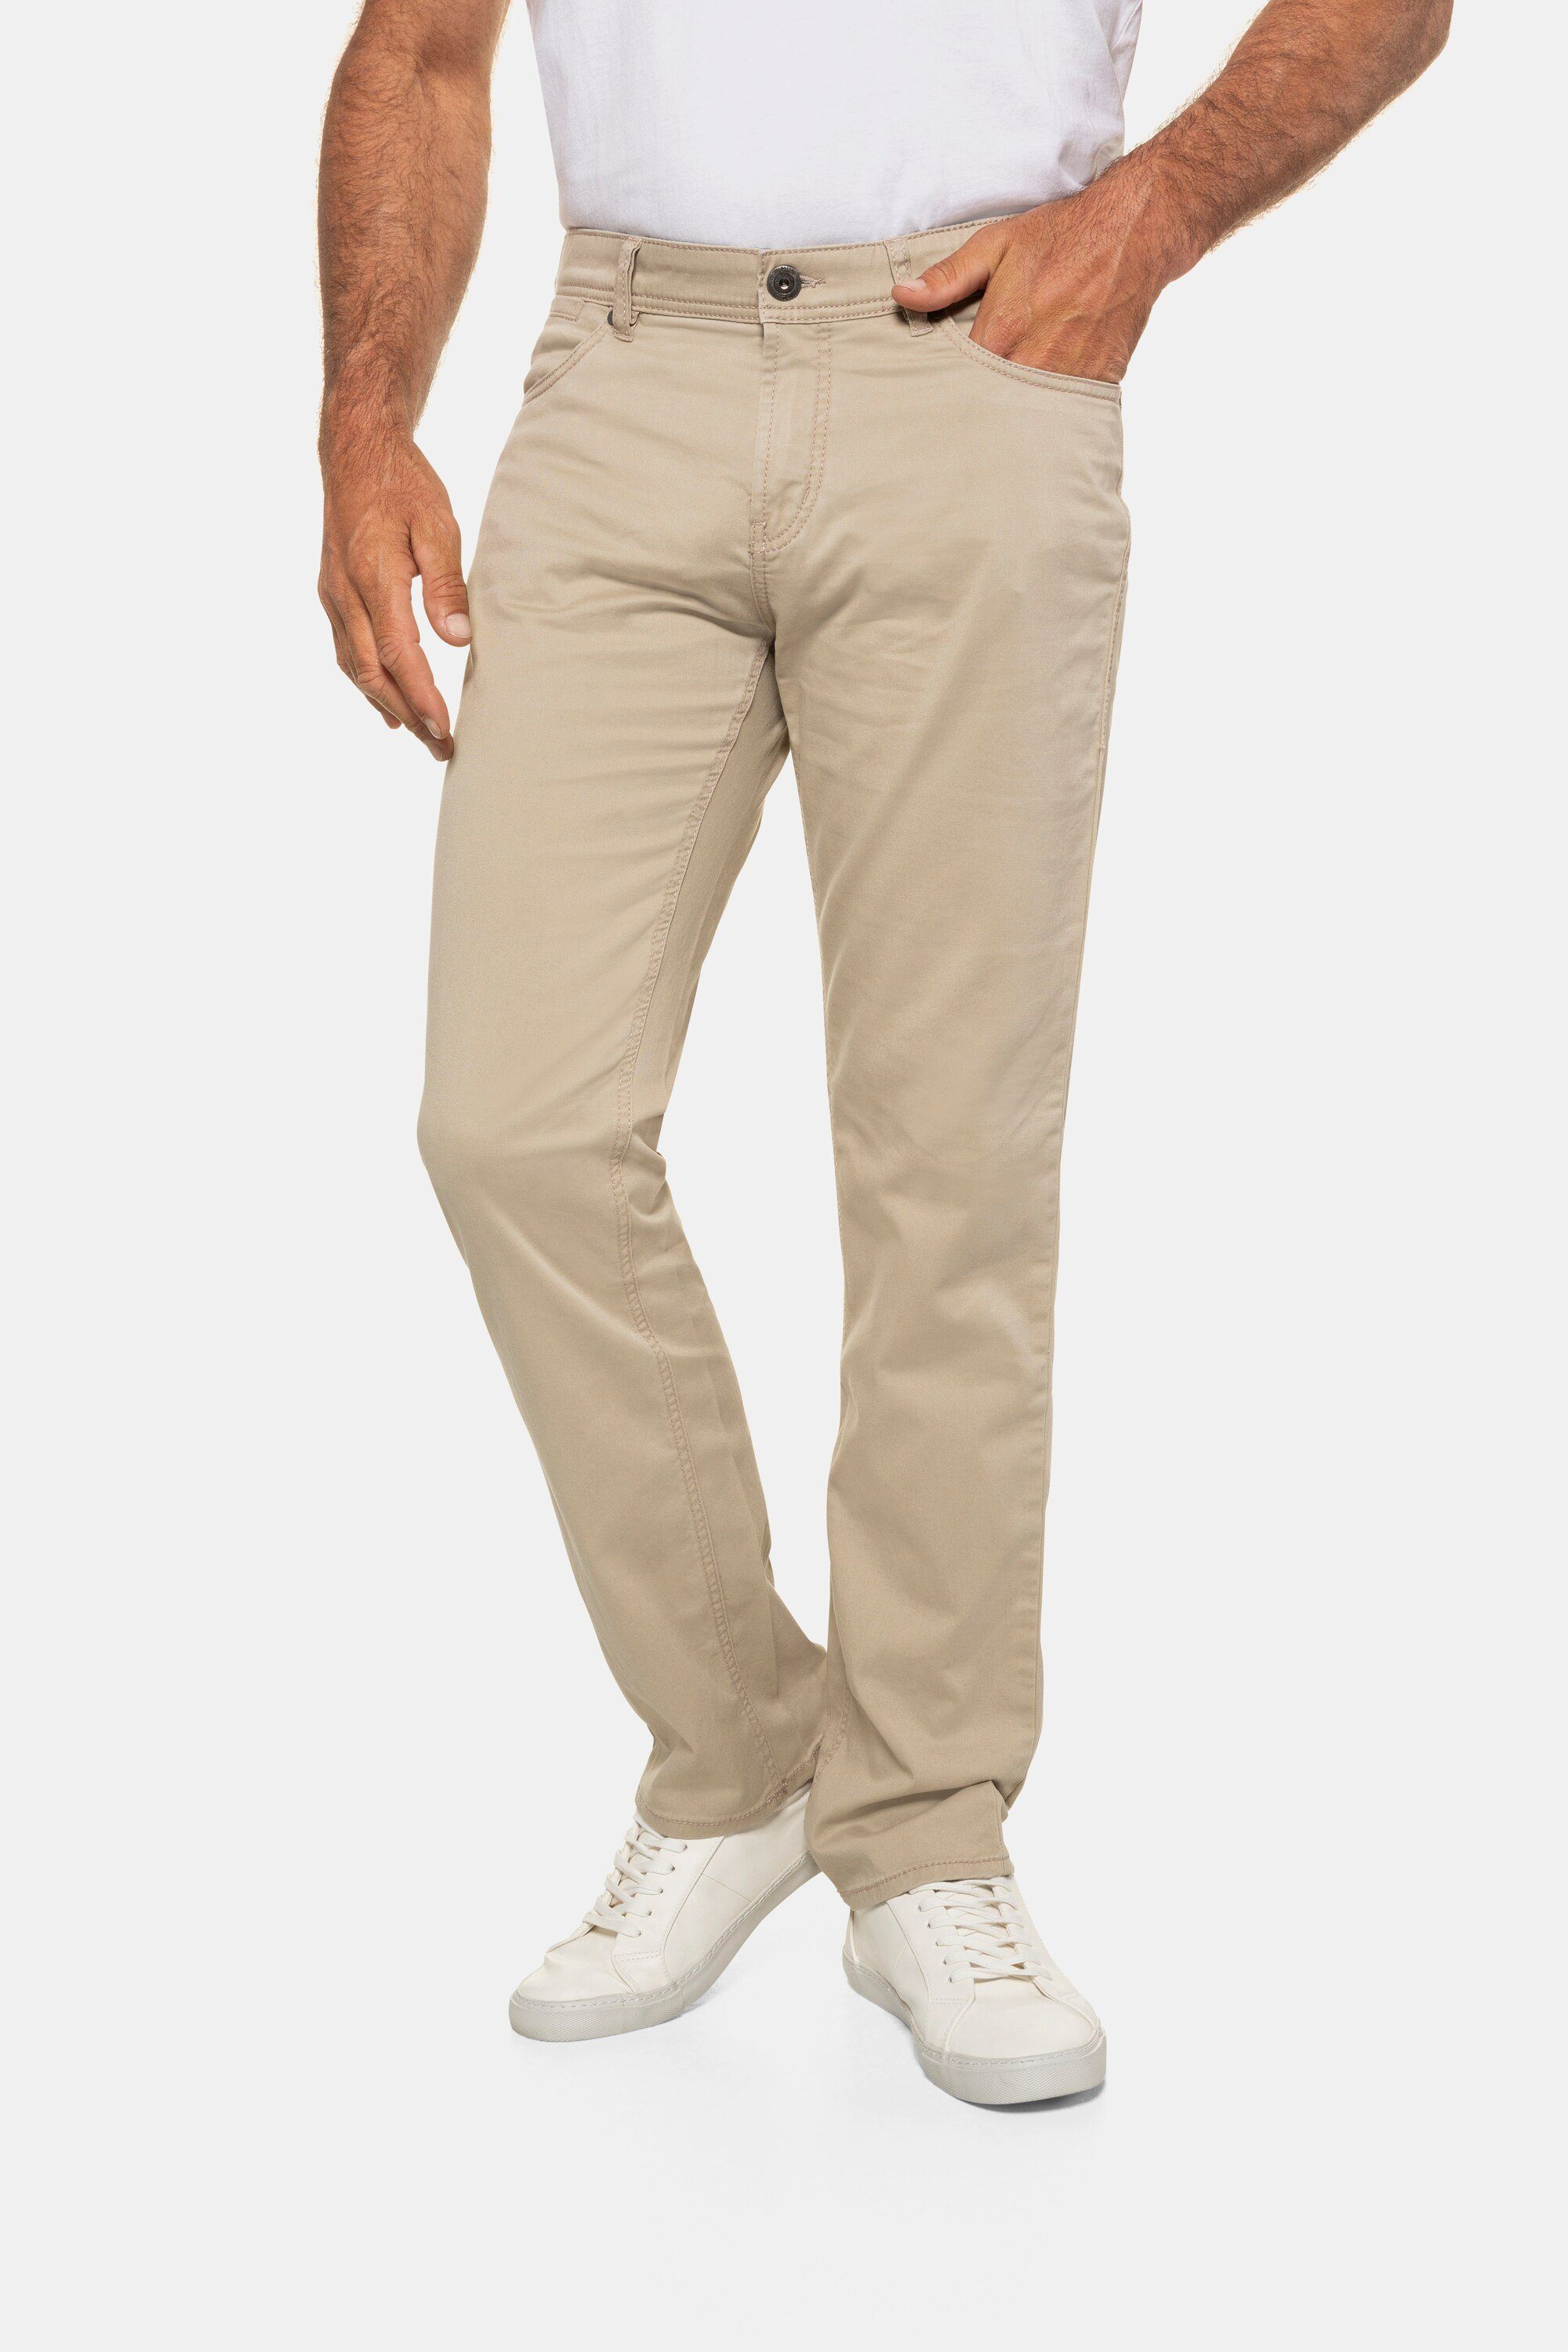 JP1880 5-Pocket-Jeans Twillhose Bauchfit bis Größe N-70/U-35 sand | Straight-Fit Jeans